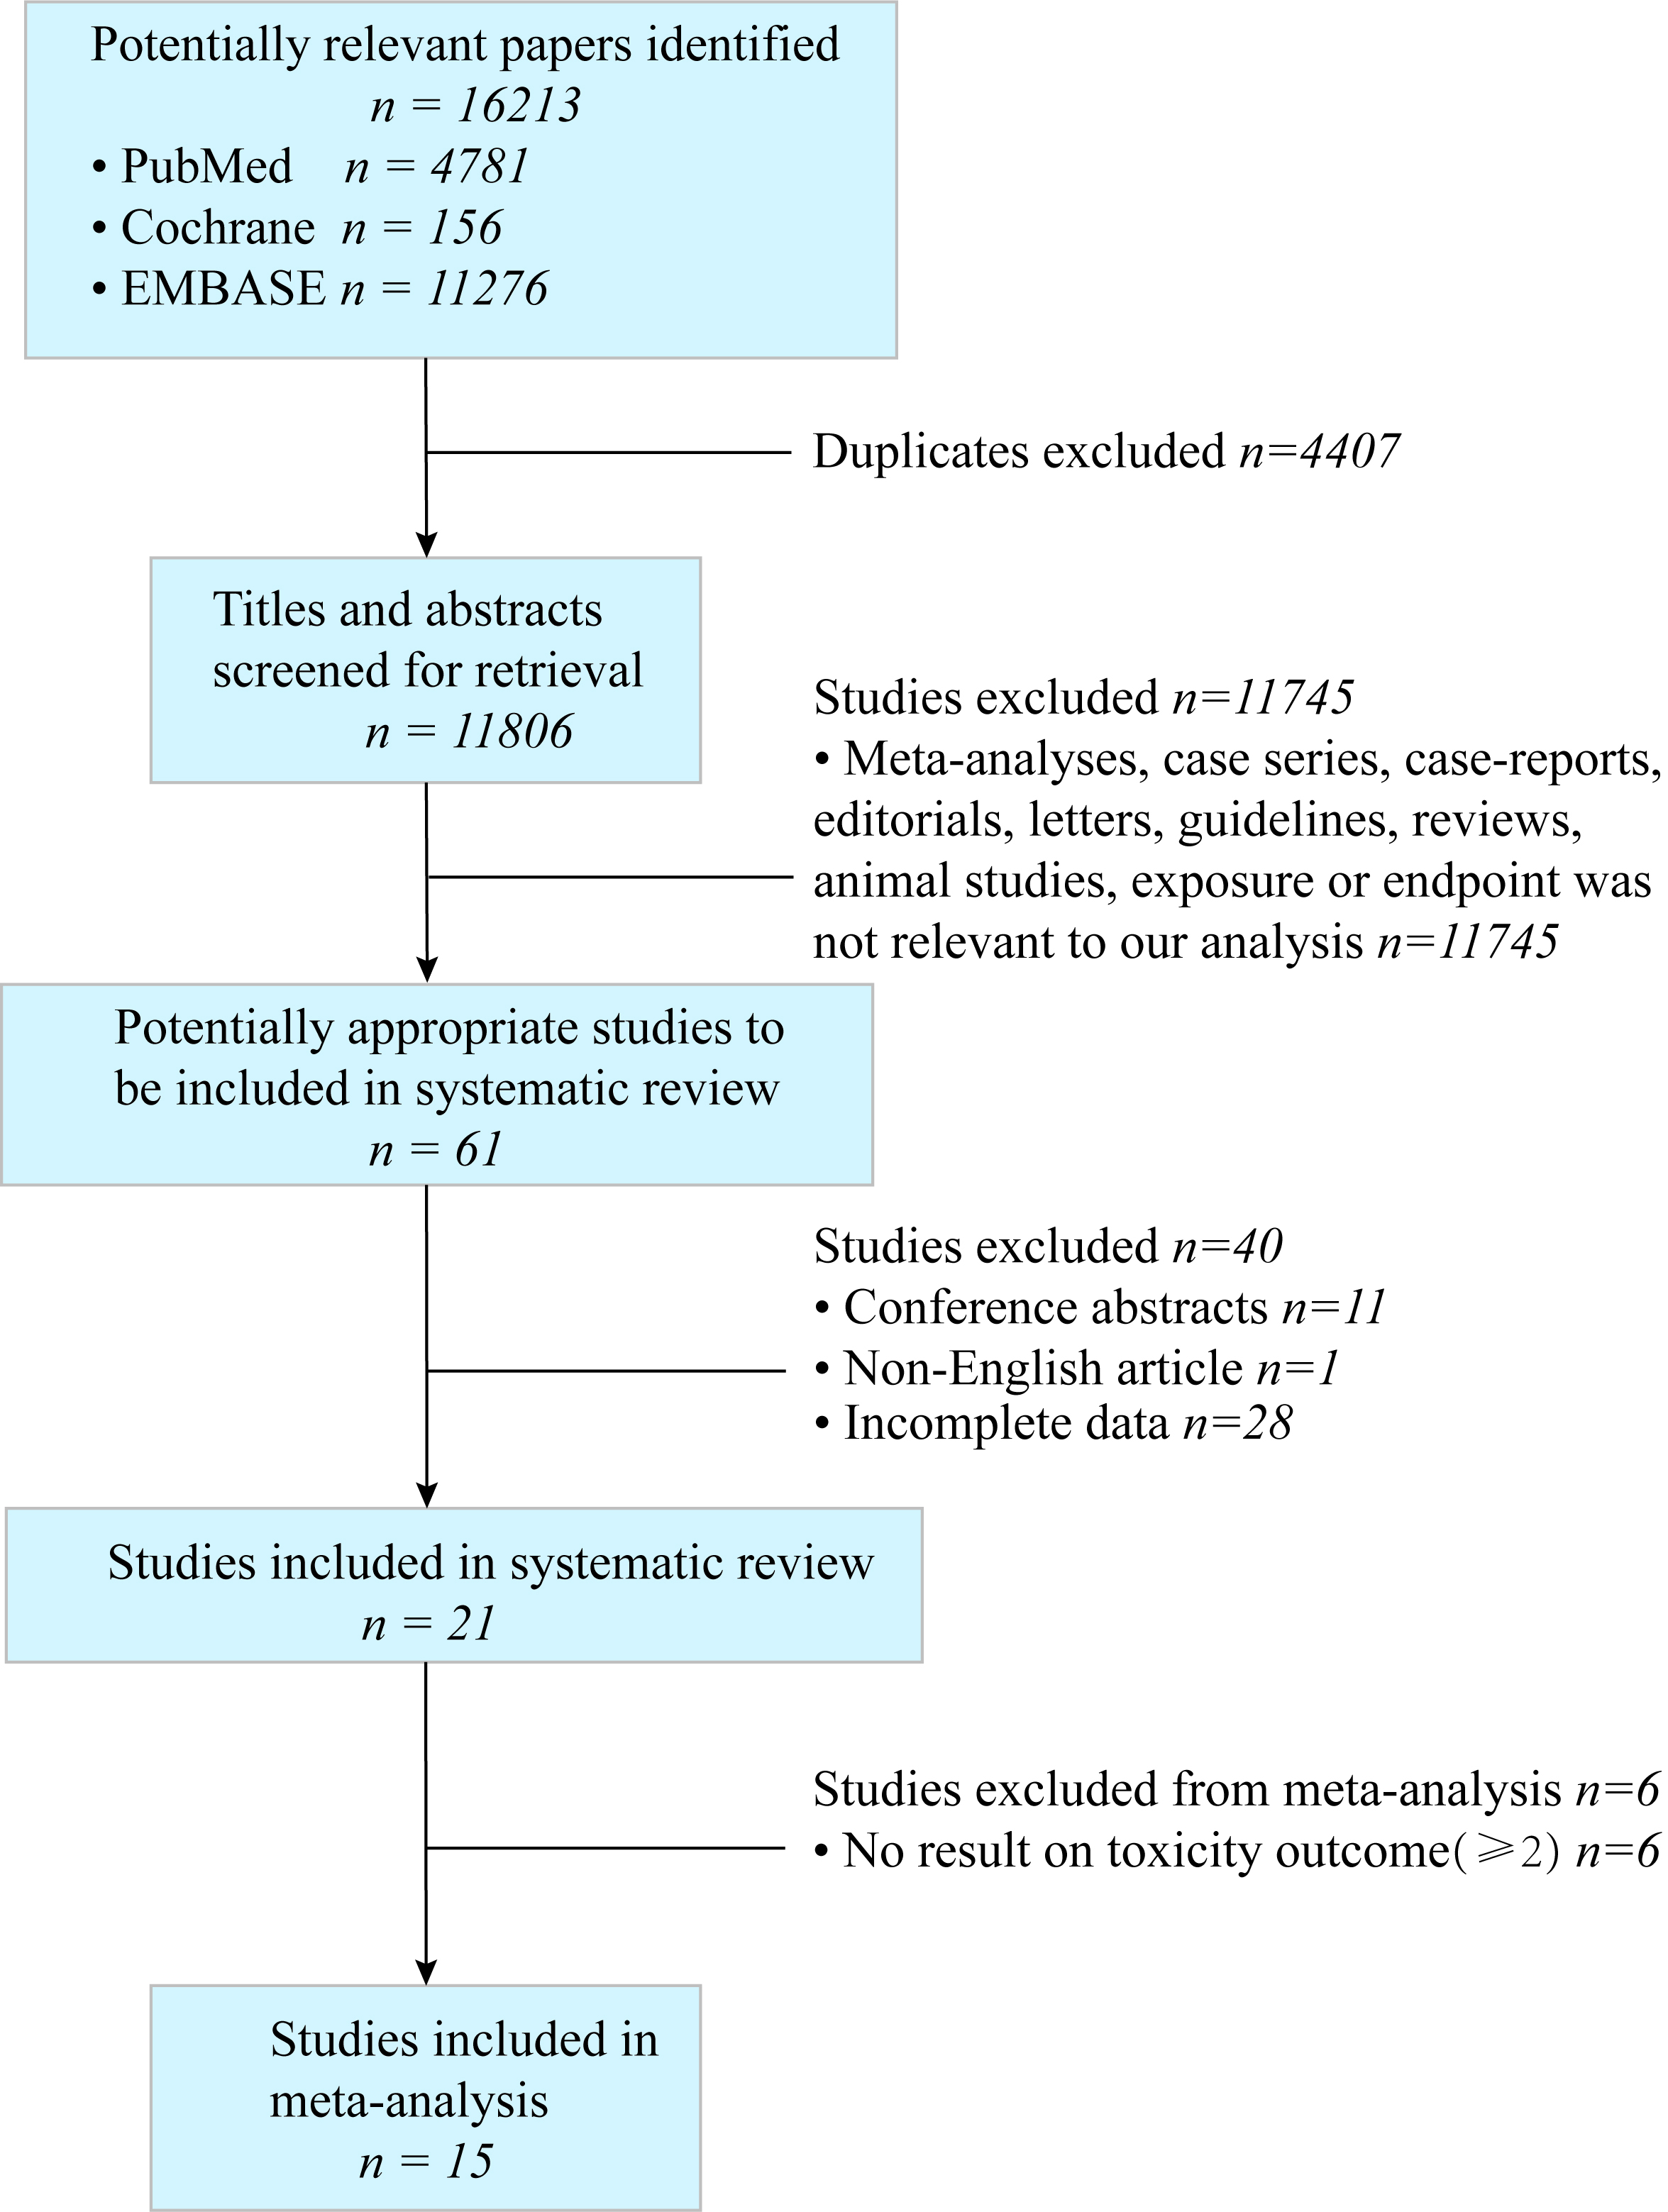 Study selection. Flow diagram summarising selection of studies that meet inclusion criteria.